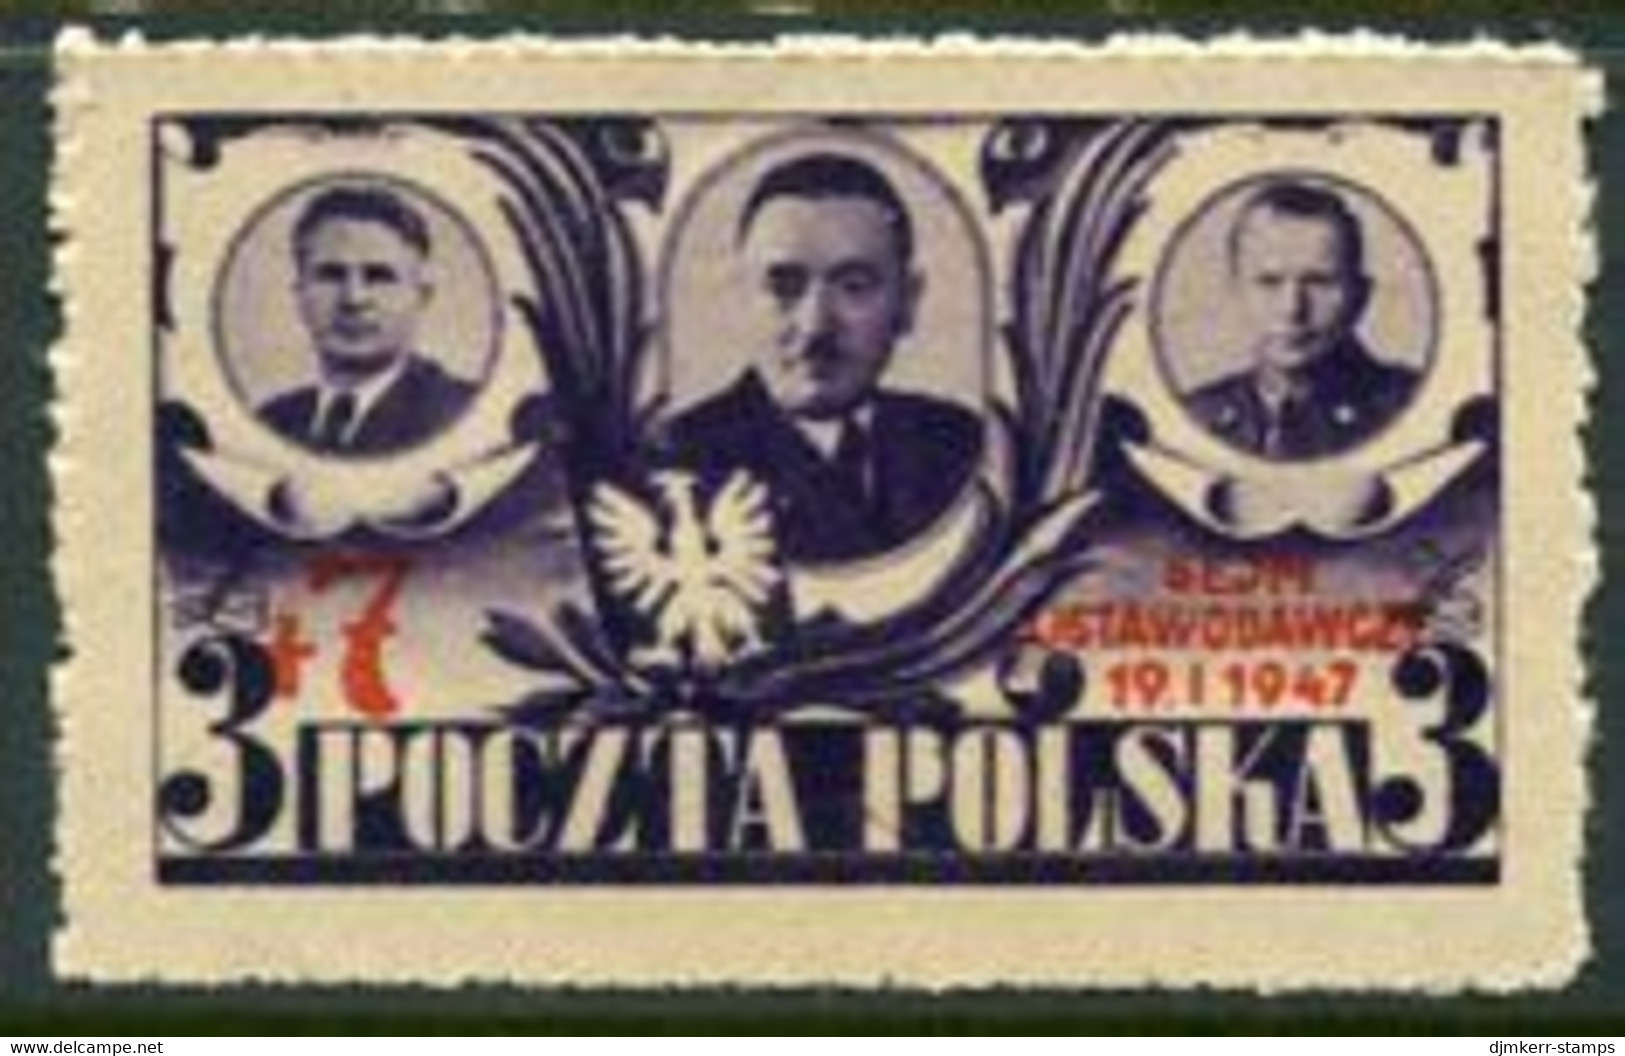 POLAND 1947 Sitting Of First Post-War Parliament MNH / **.  Michel 451 - Nuovi